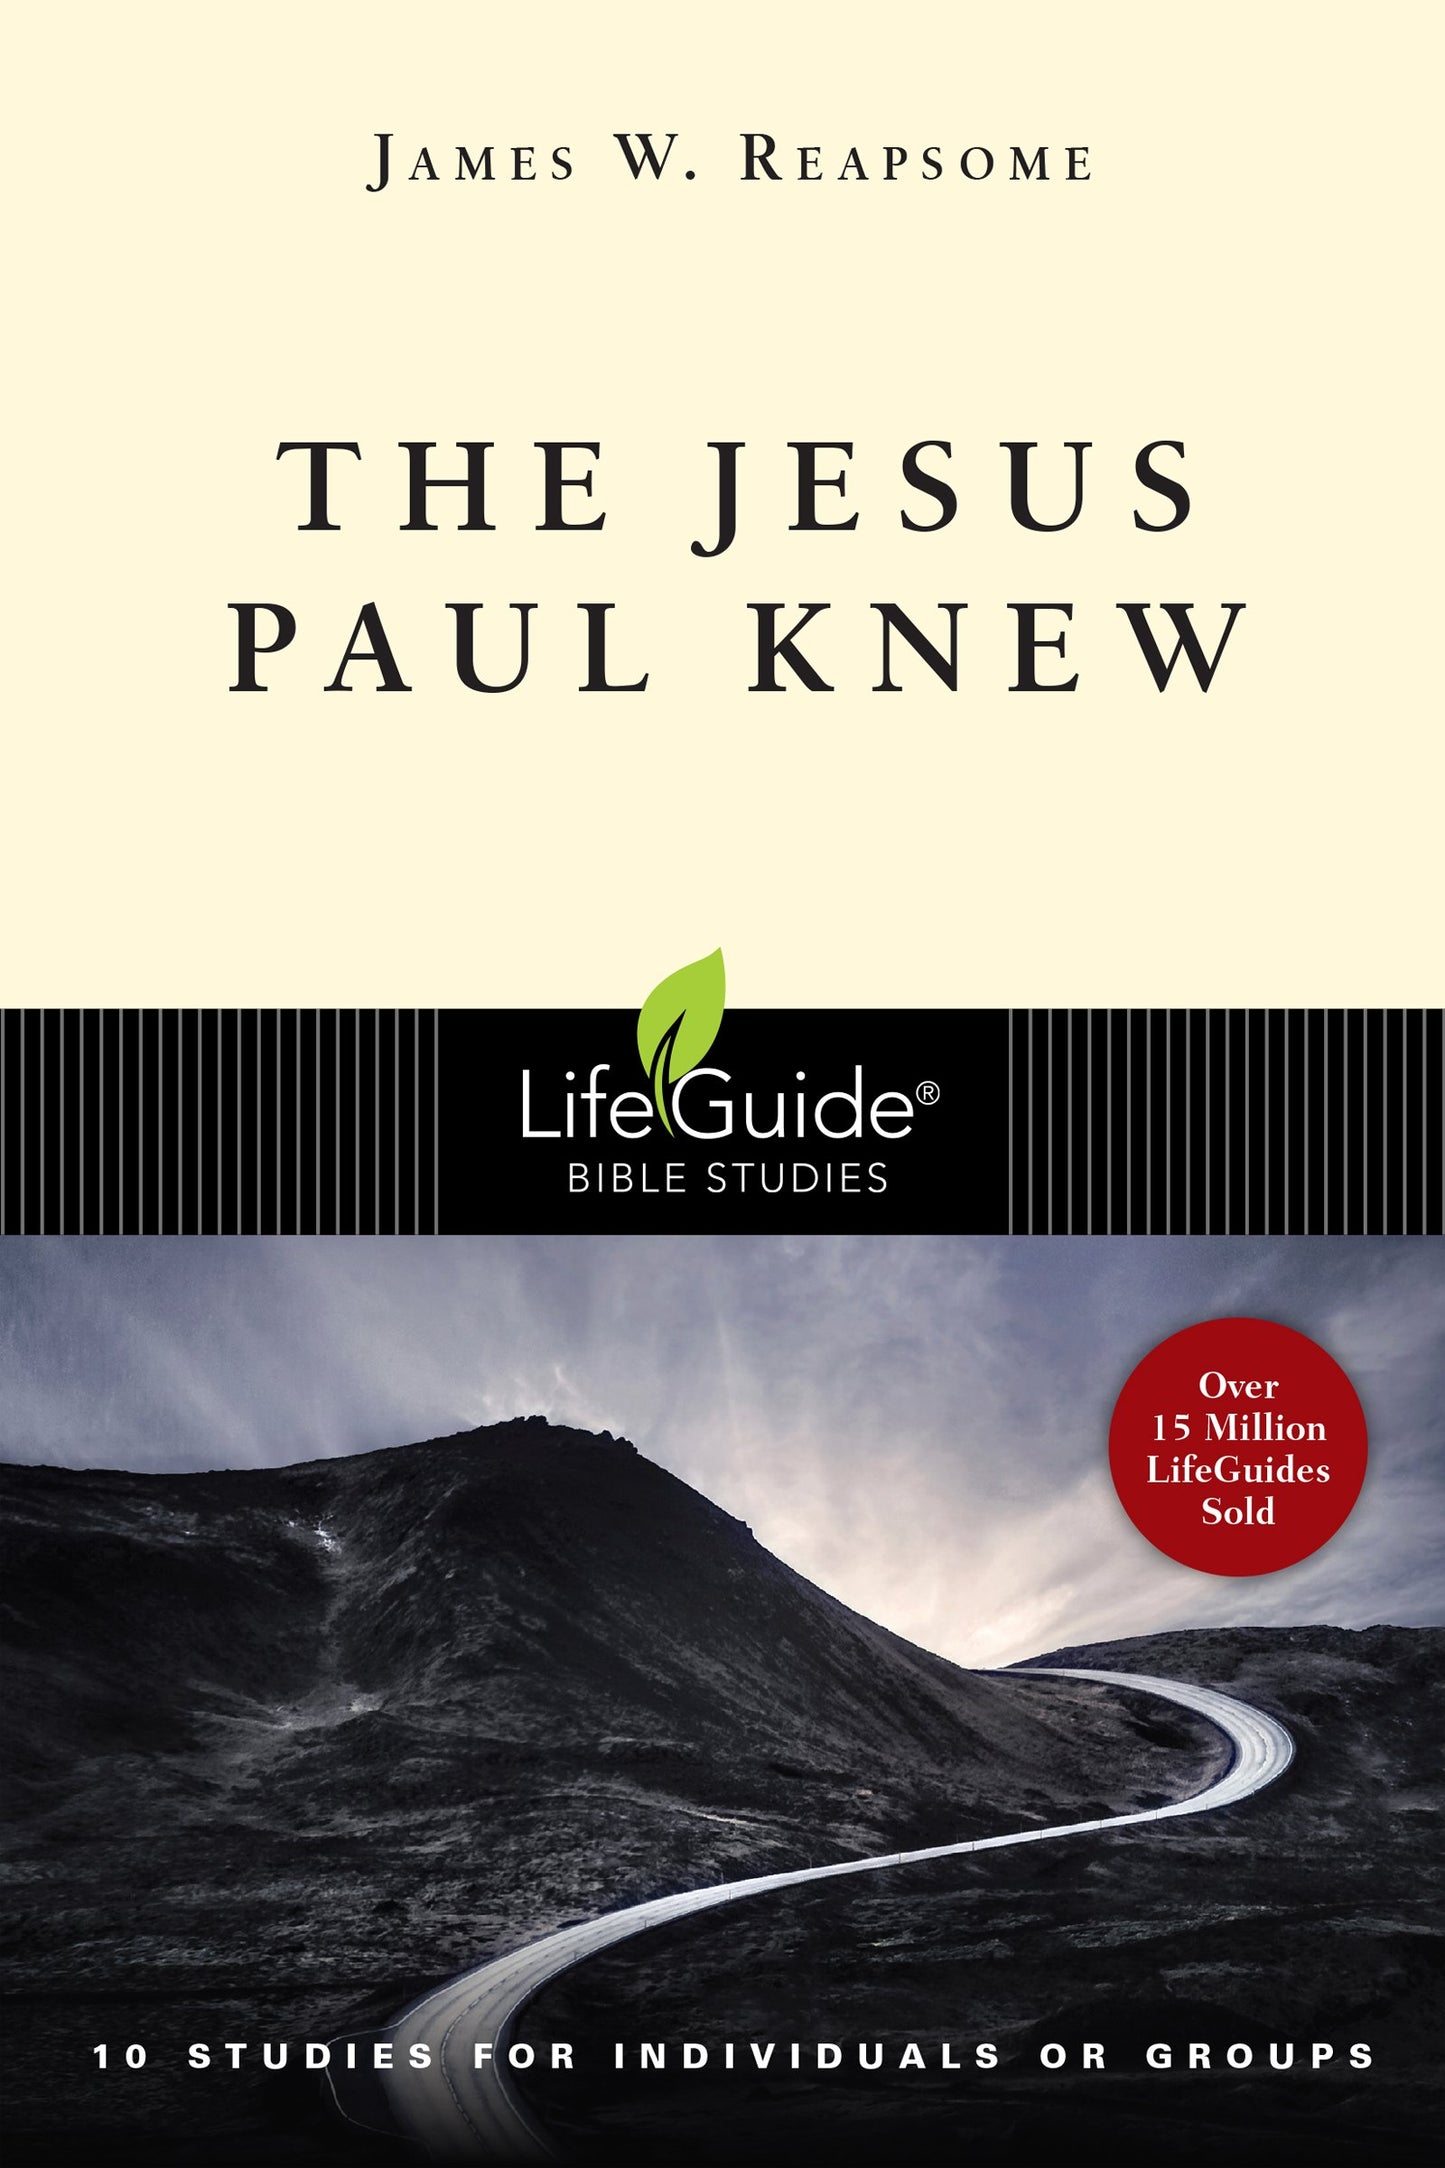 The Jesus Paul Knew (LifeGuide Bible Studies)